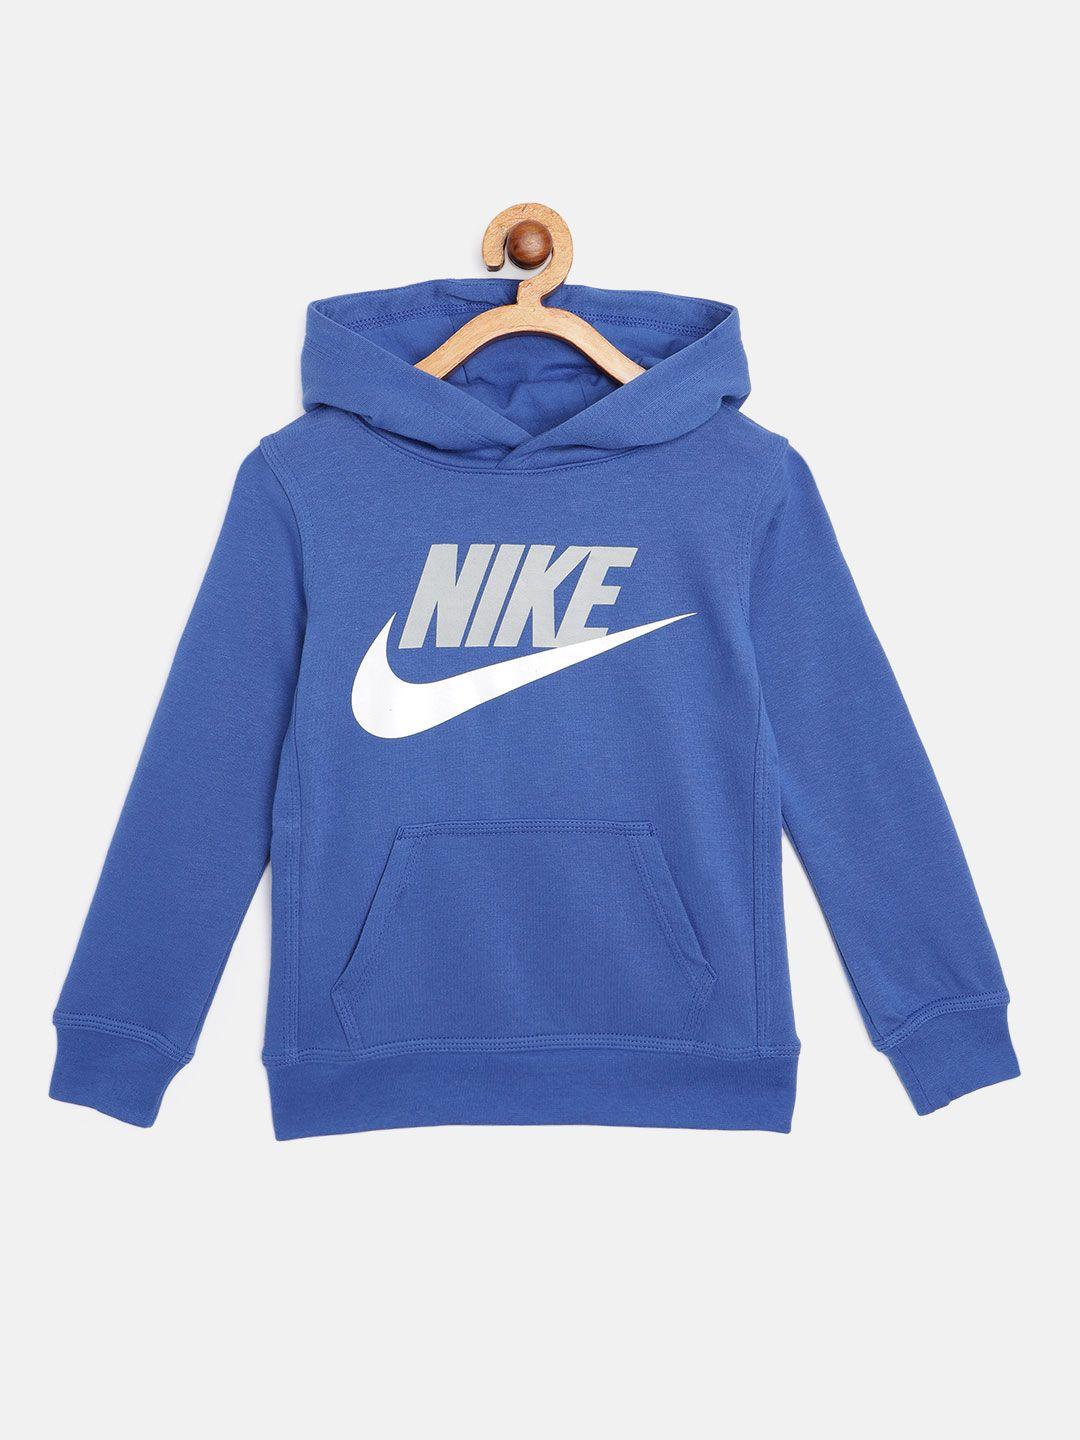 nike-boys-blue-&-grey-brand-logo-print-club-hbr-hoodie-sweatshirt